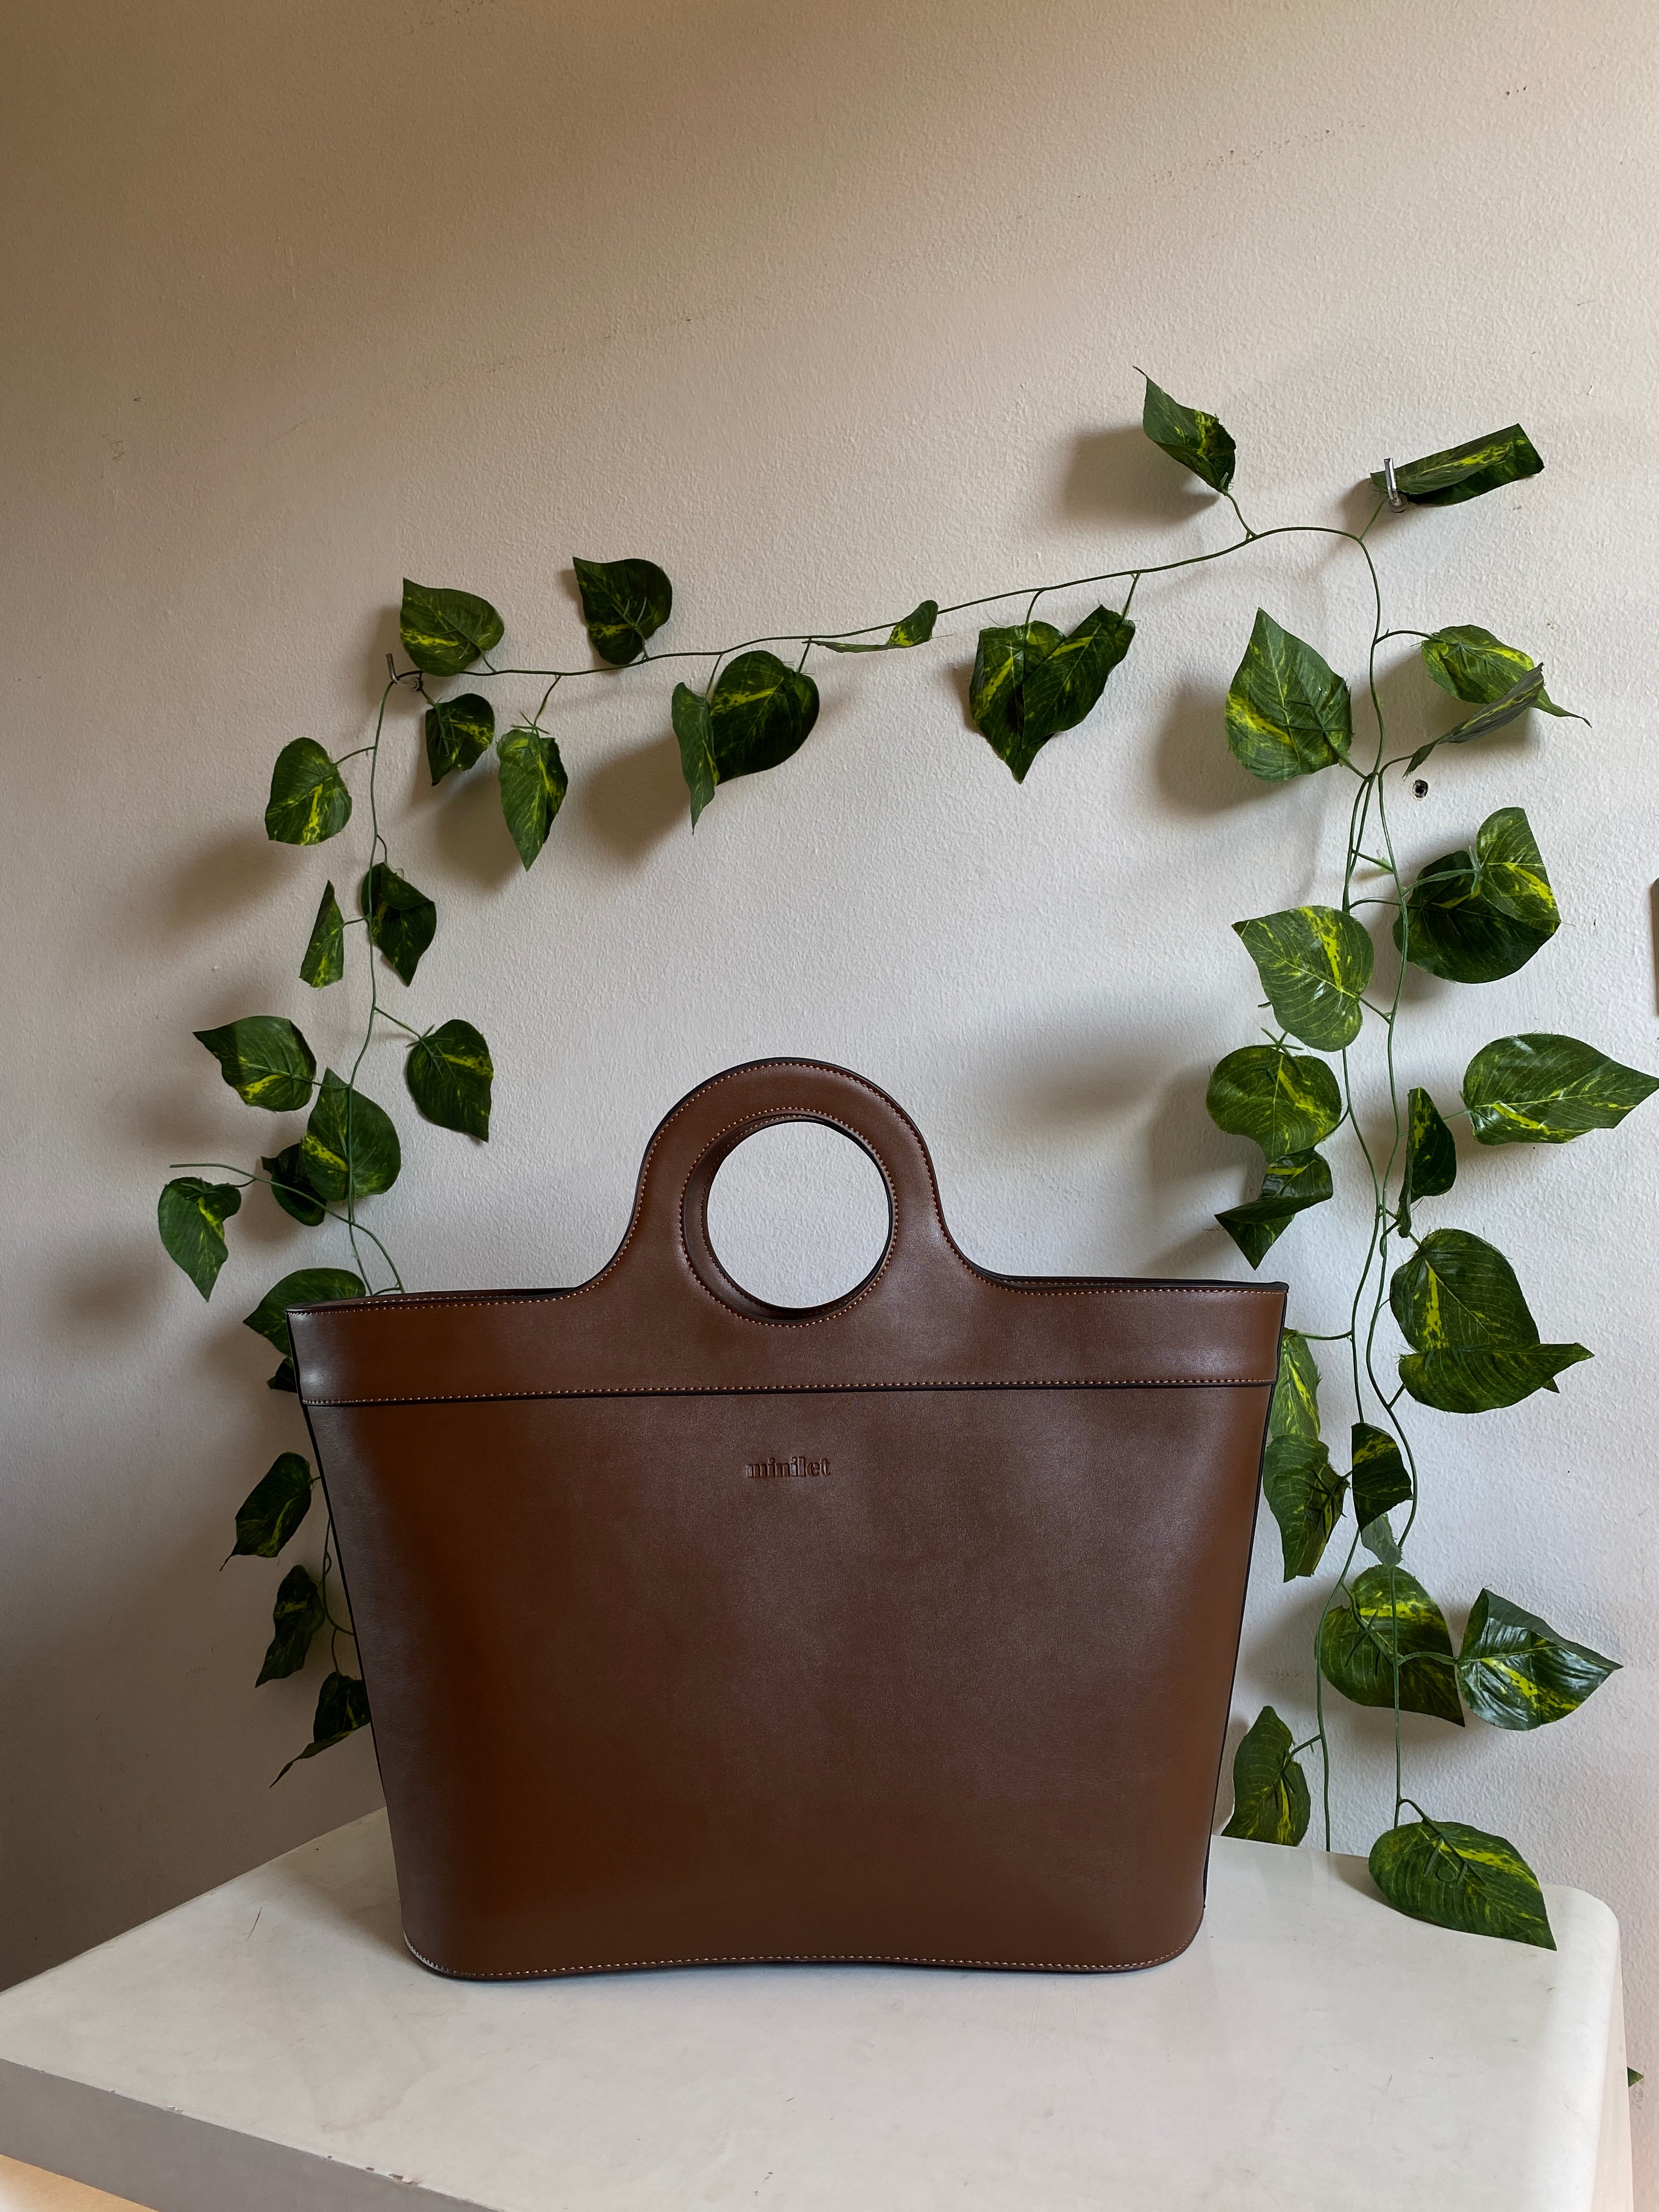 Brown | Basket Leather Bag